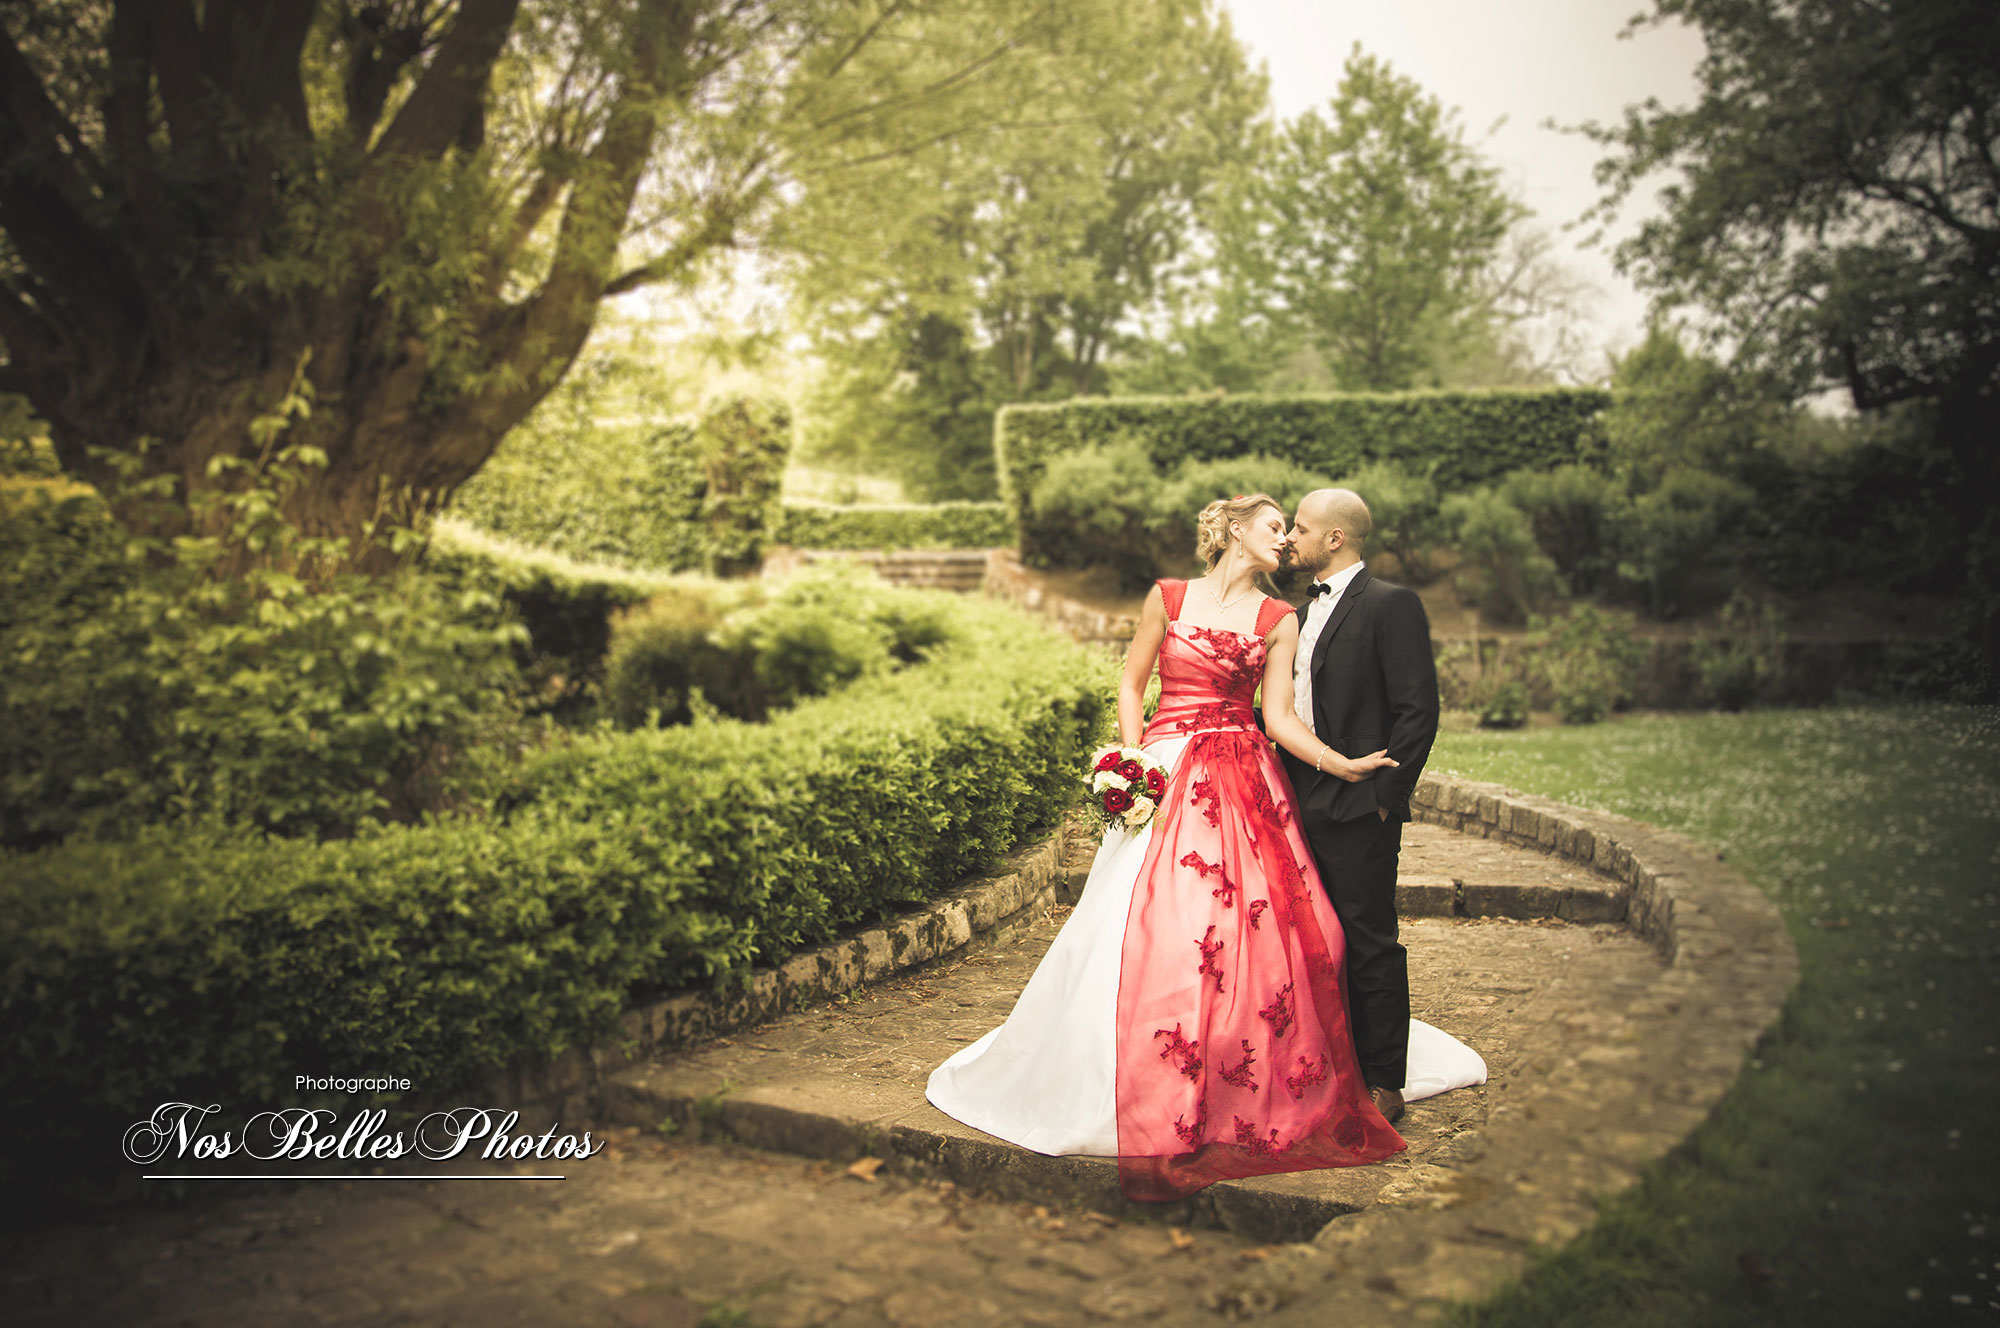 Photographe vidéaste mariage Meulan-en-Yvelines